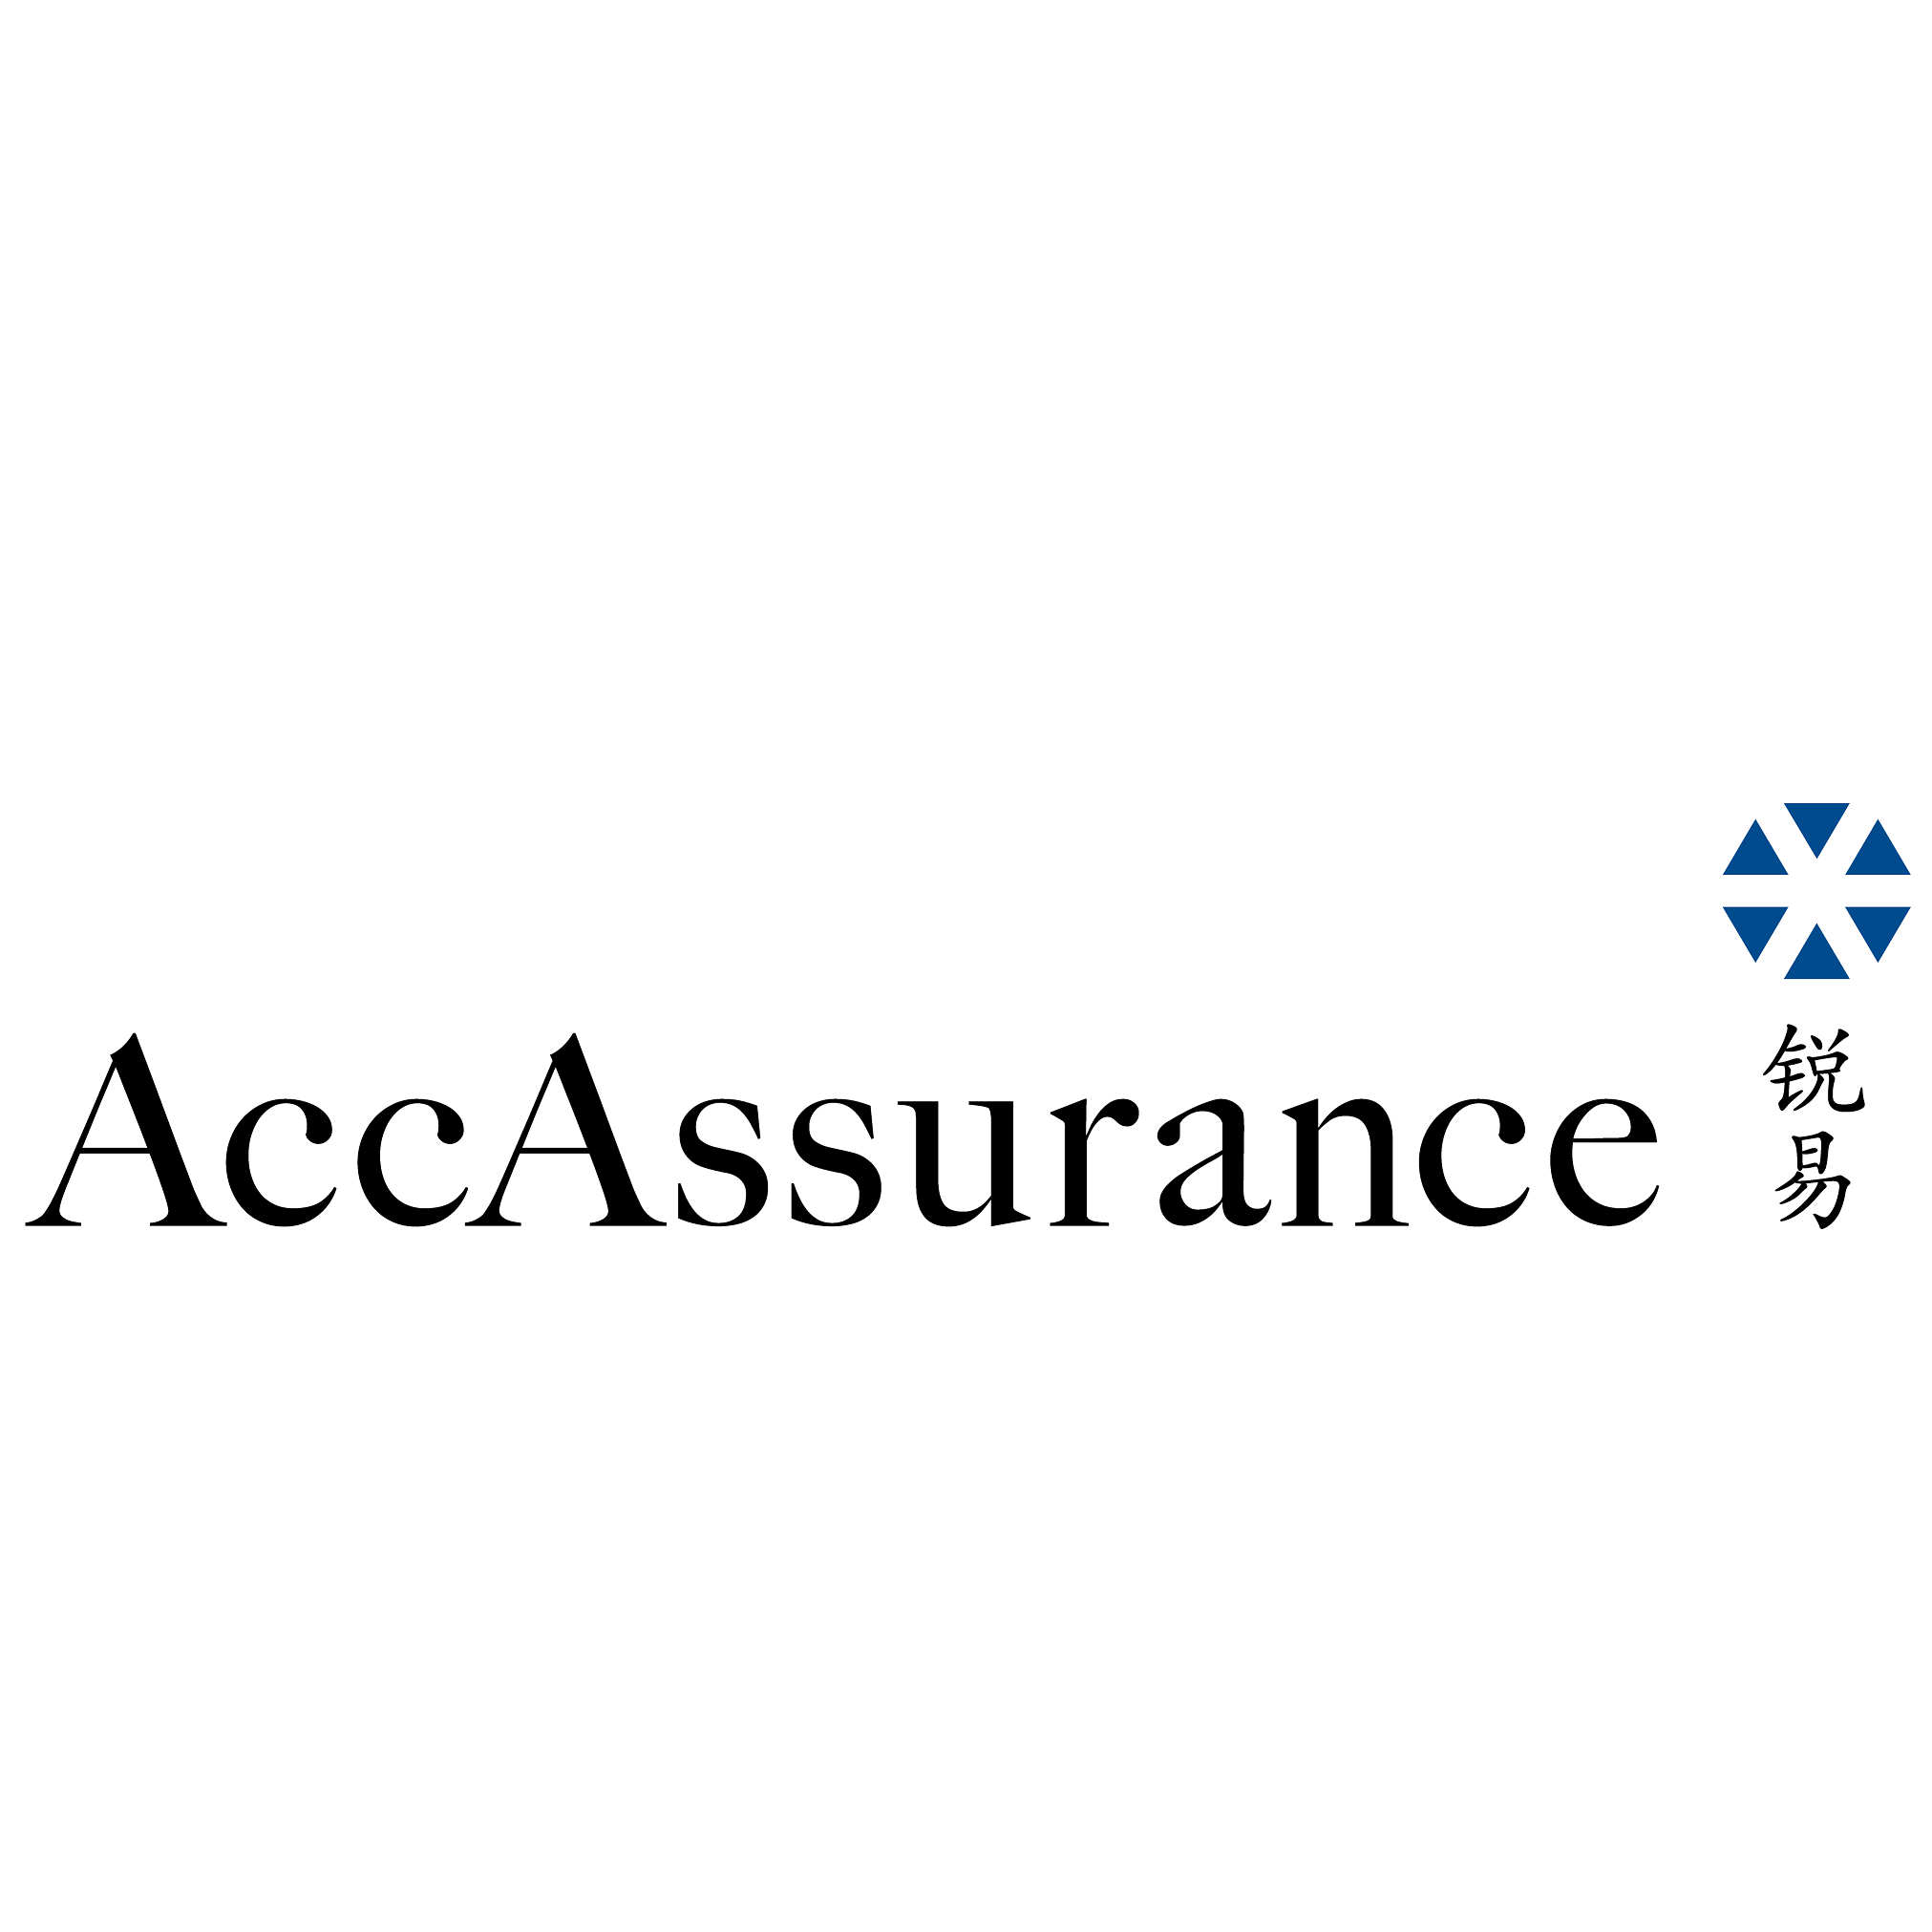 Accassurance Llp company logo